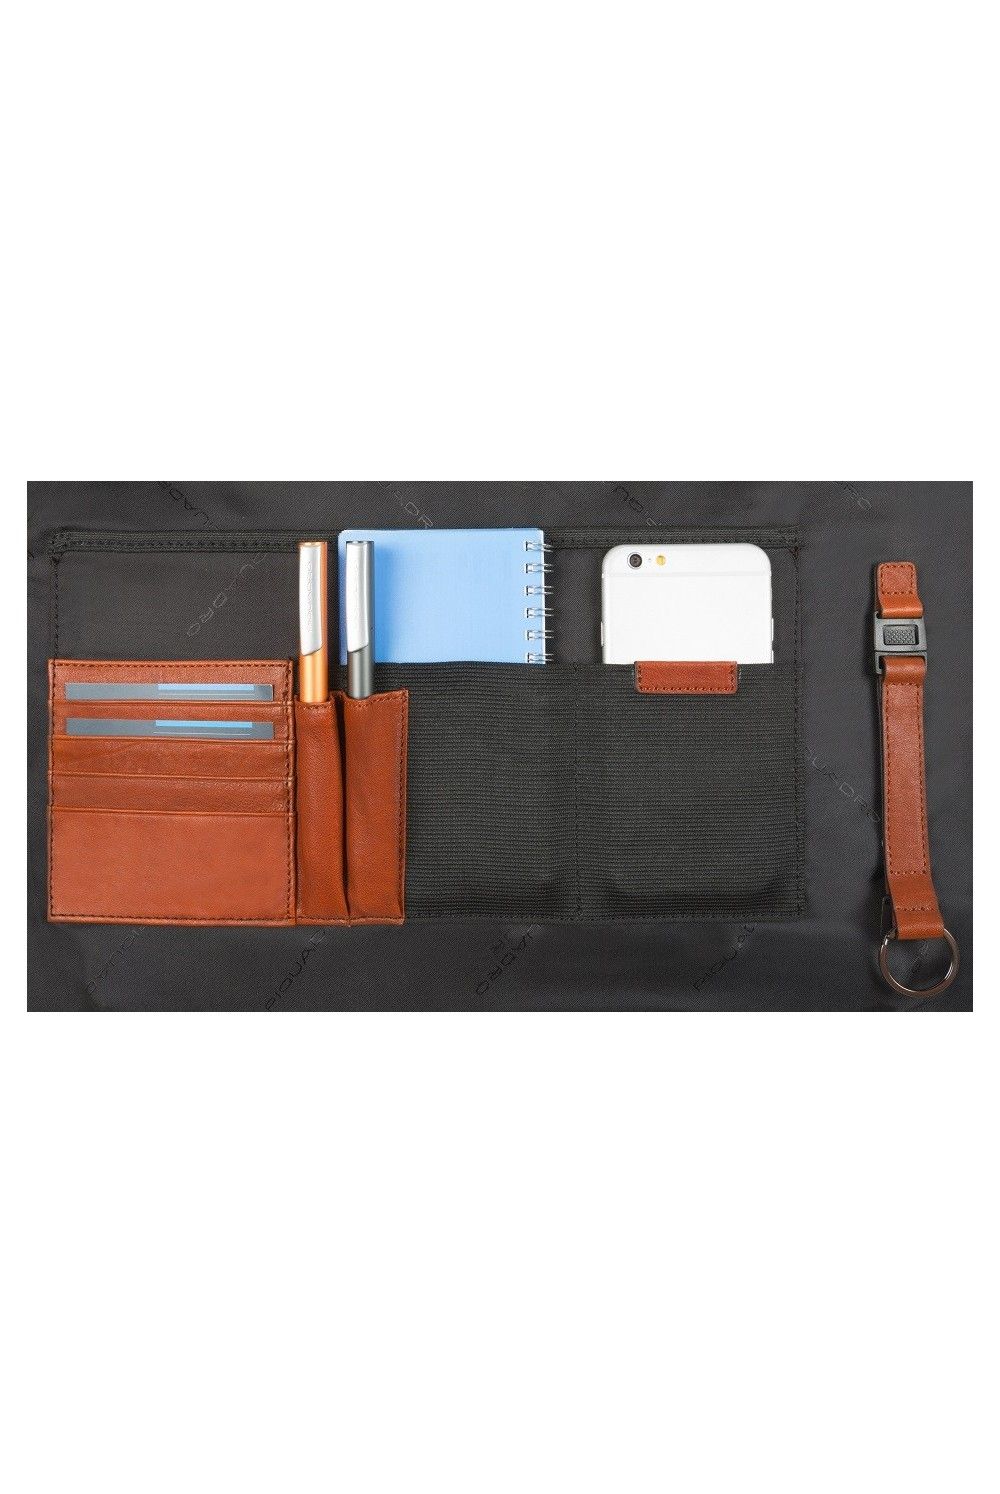 Laptop bag Piquadro Black Square 15.6 inches